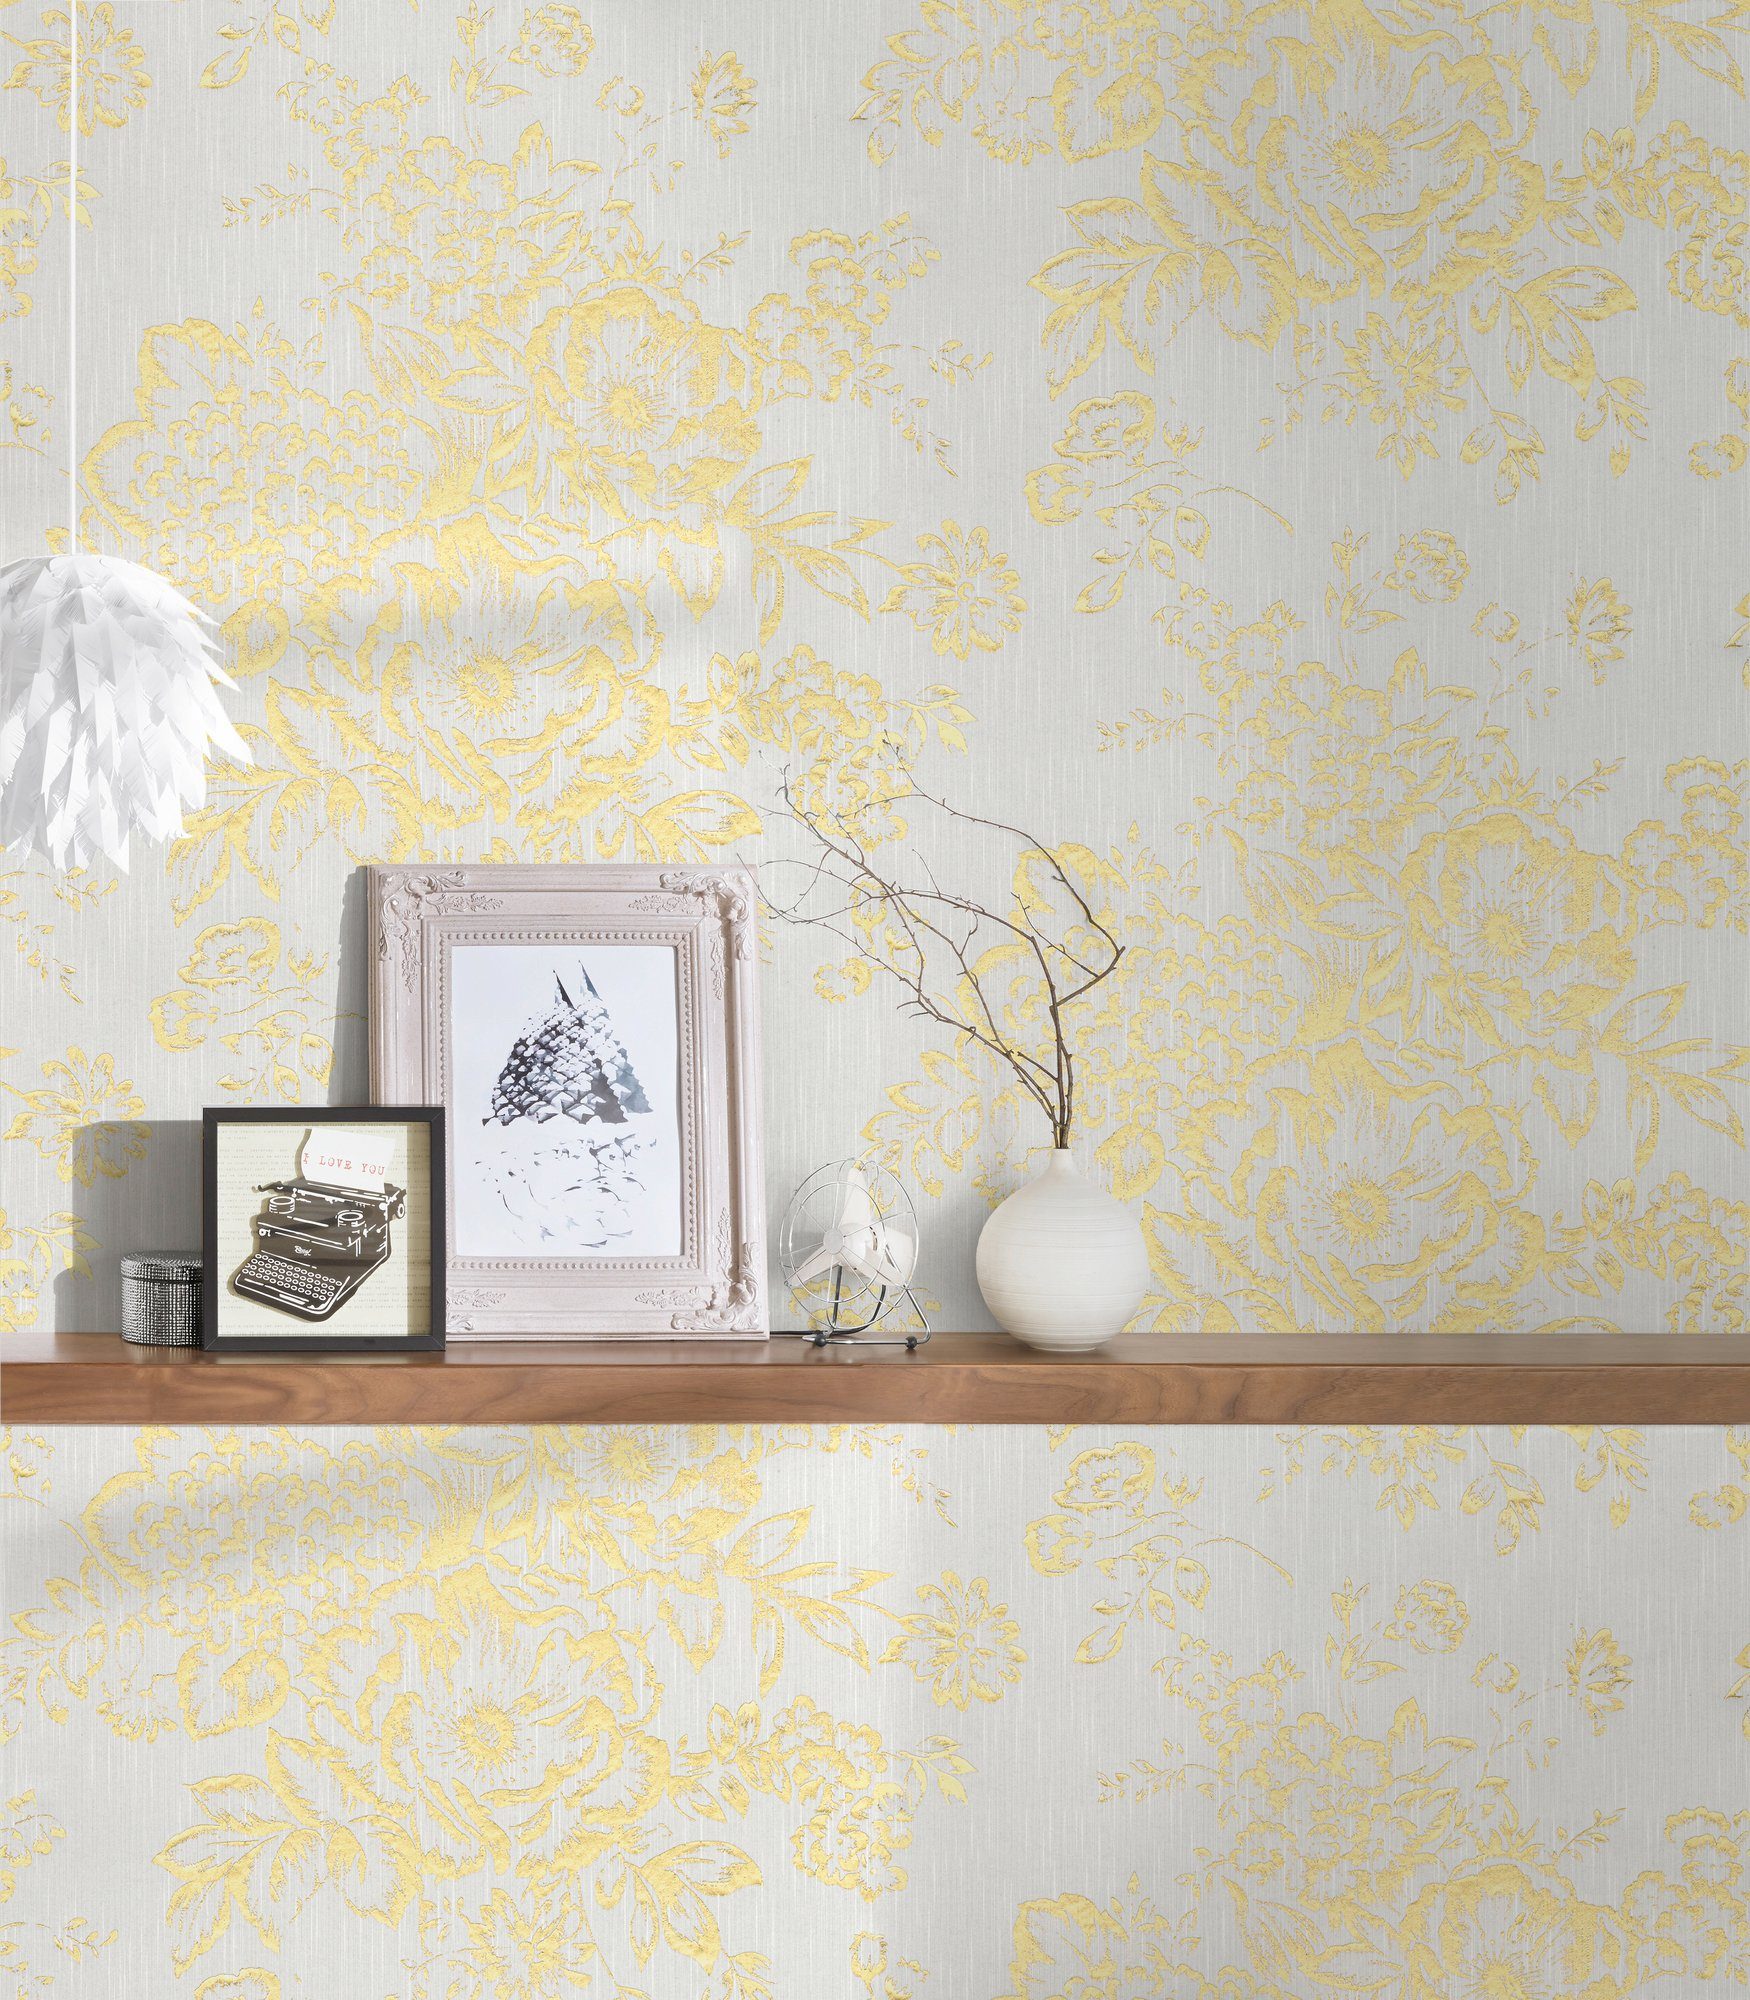 Textiltapete Paper glänzend, A.S. samtig, Silk, Architects gold/weiß Tapete Metallic matt, floral, Barocktapete Création Blumen